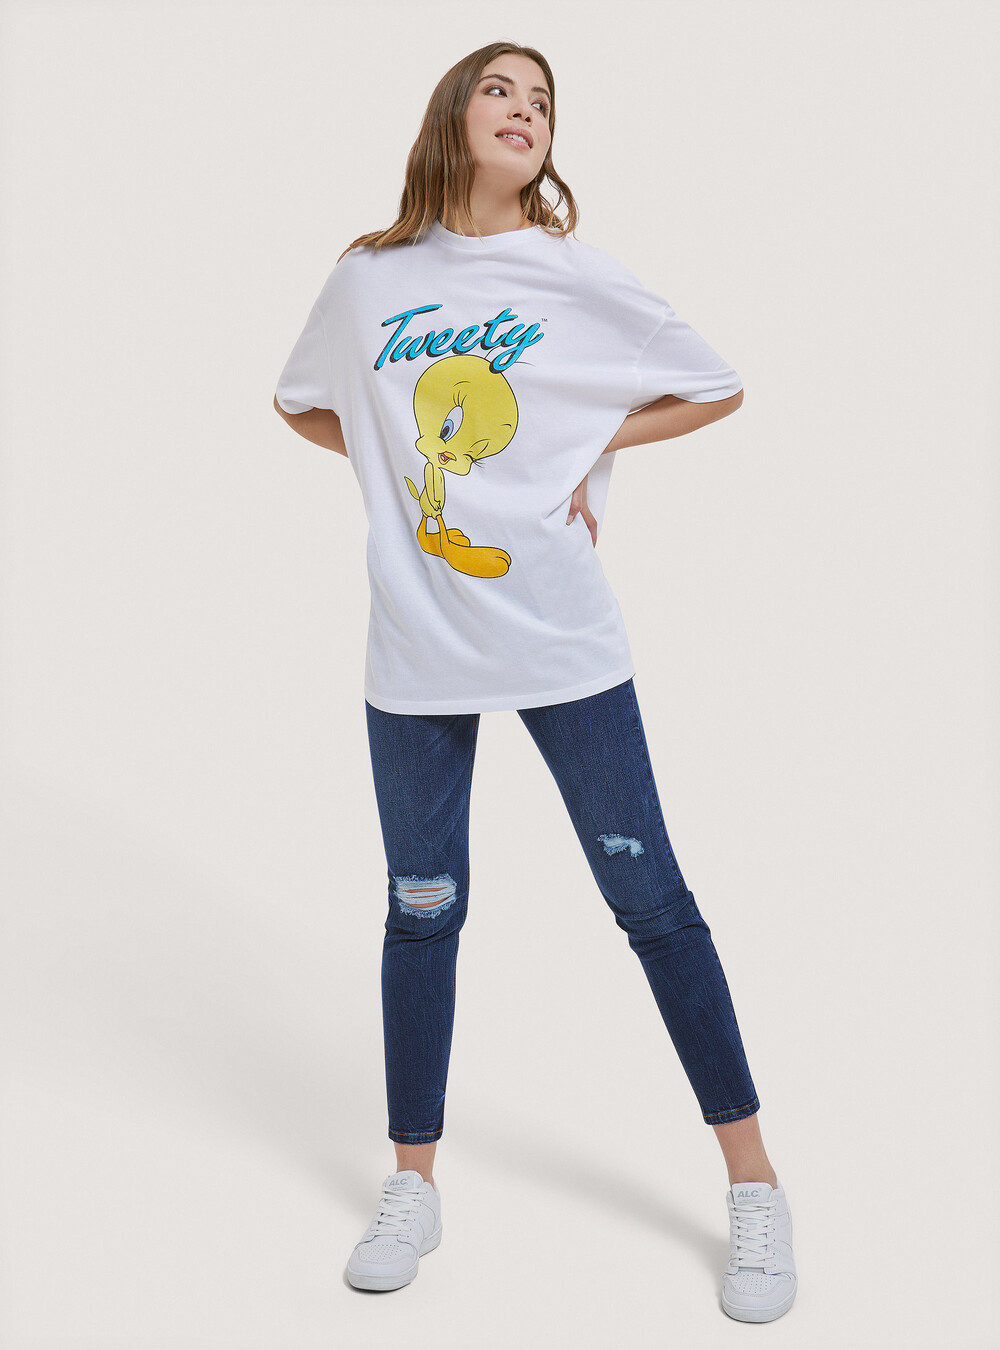 Looney Tunes x Alcott T-shirt